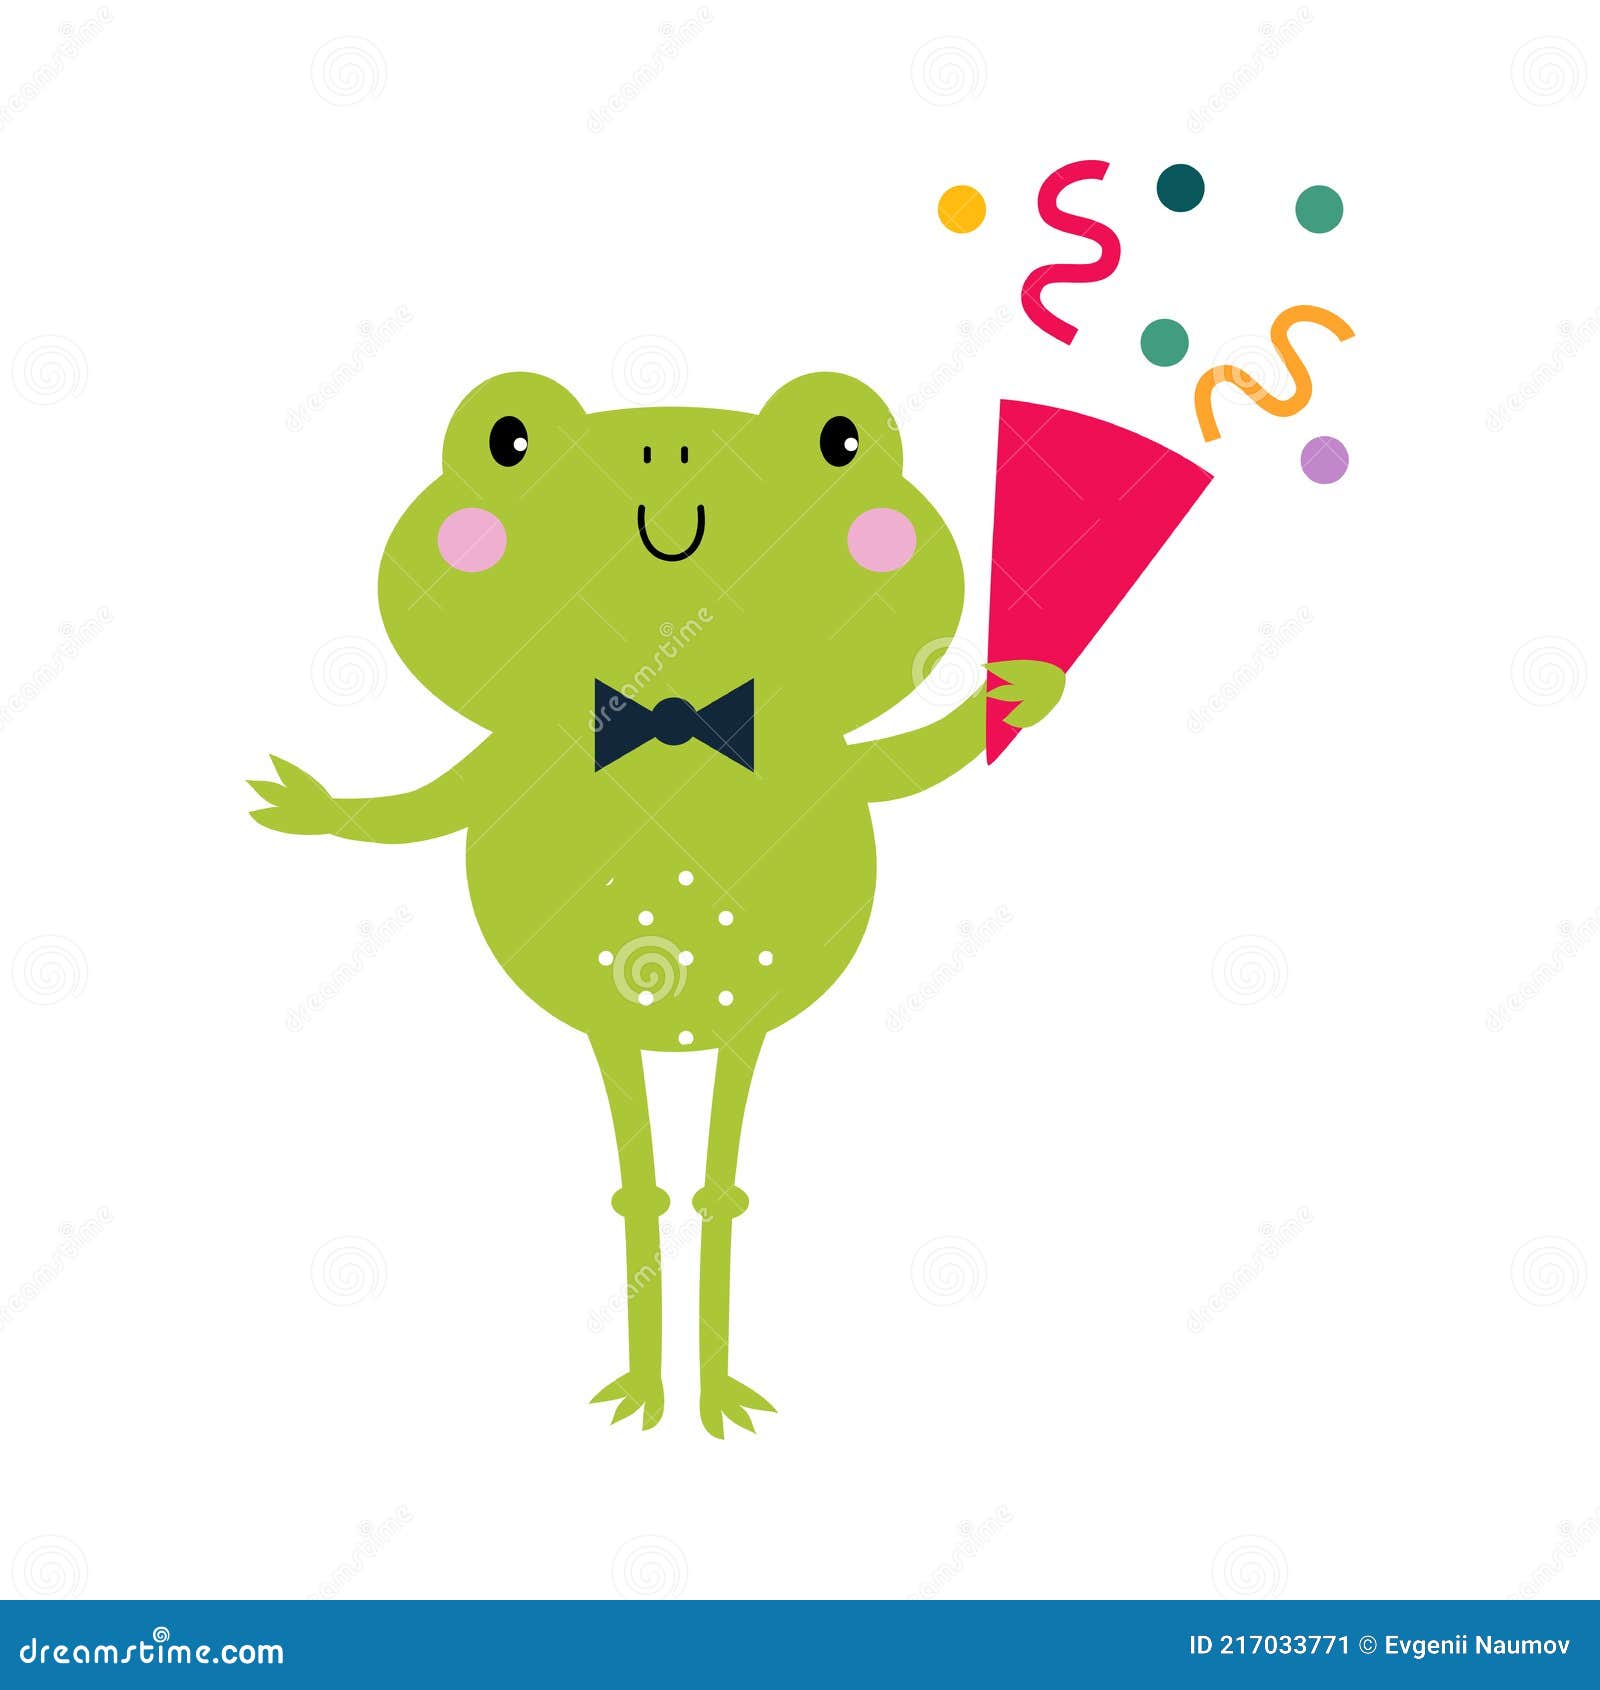 https://thumbs.dreamstime.com/z/happy-birthday-concept-adorable-frog-baby-animal-party-cracker-shower-celebration-element-cartoon-vector-illustration-217033771.jpg